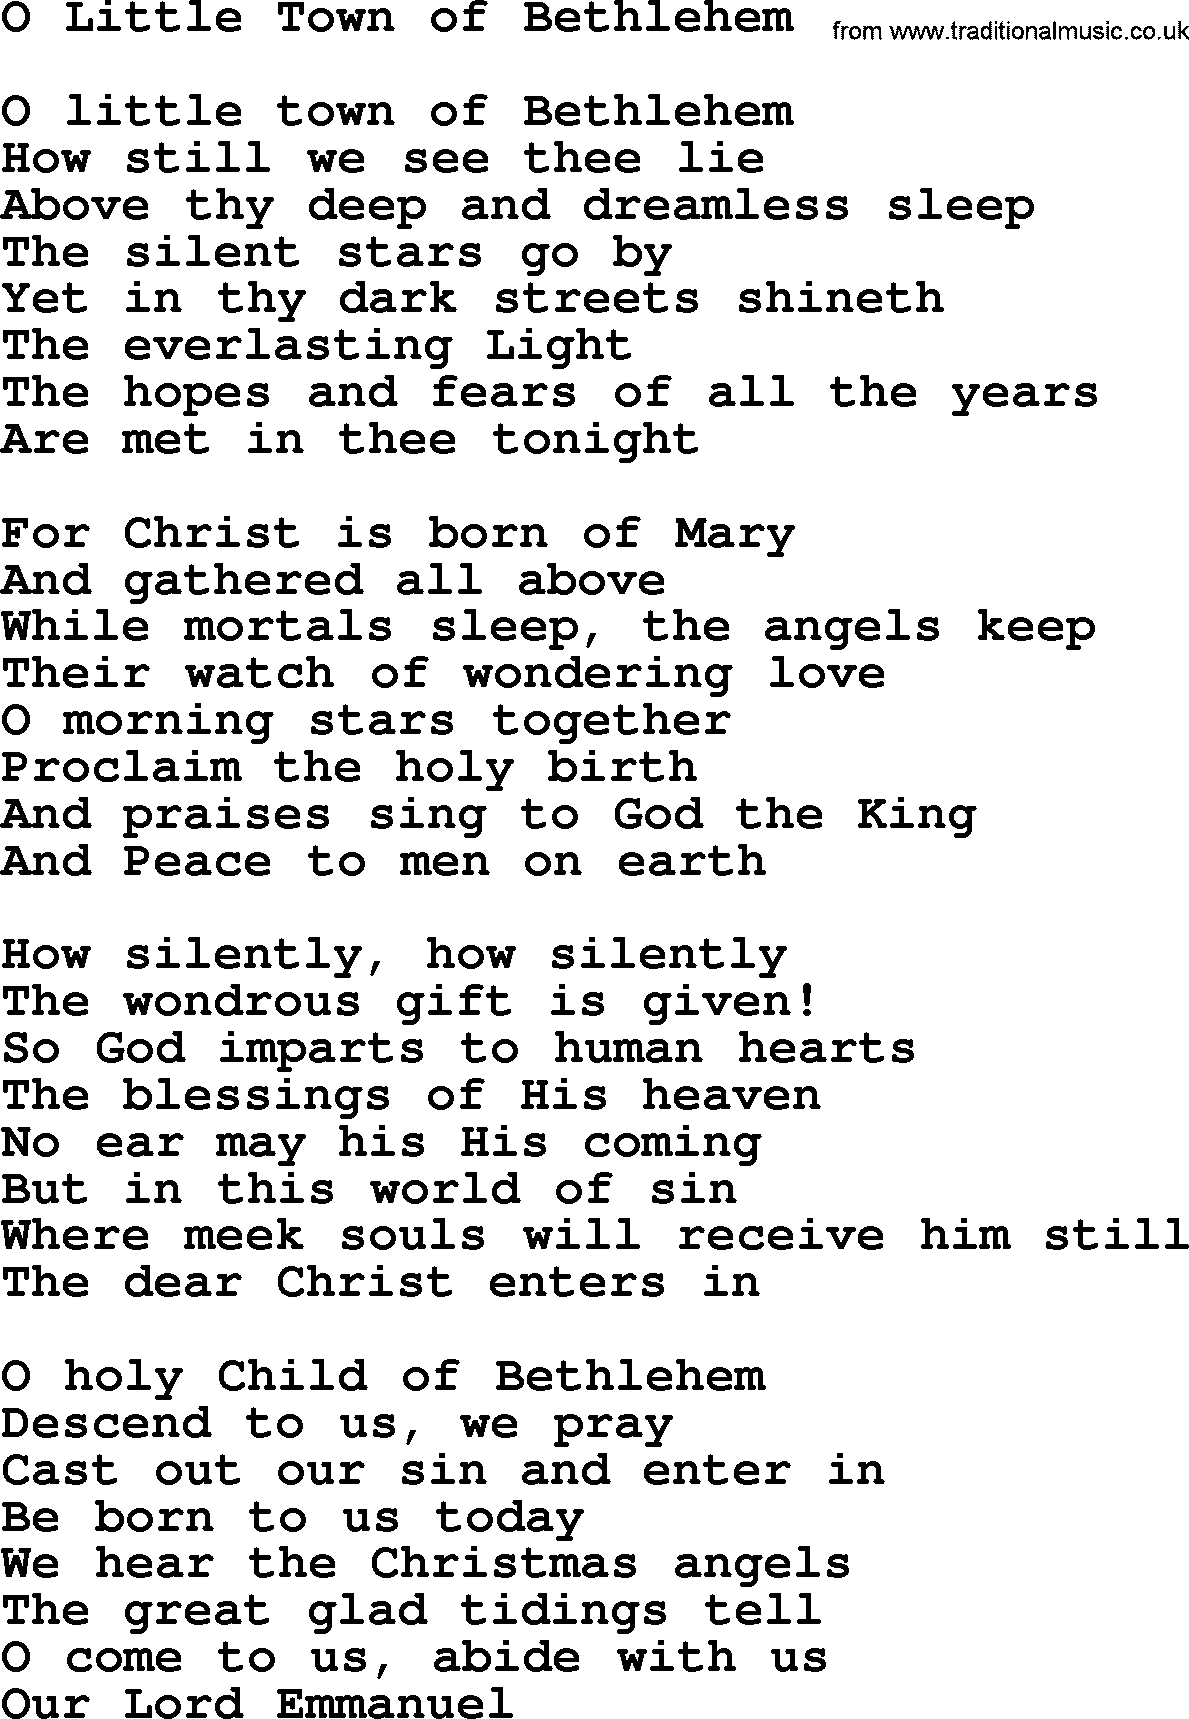 The Byrds song O Little Town Of Bethlehem, lyrics